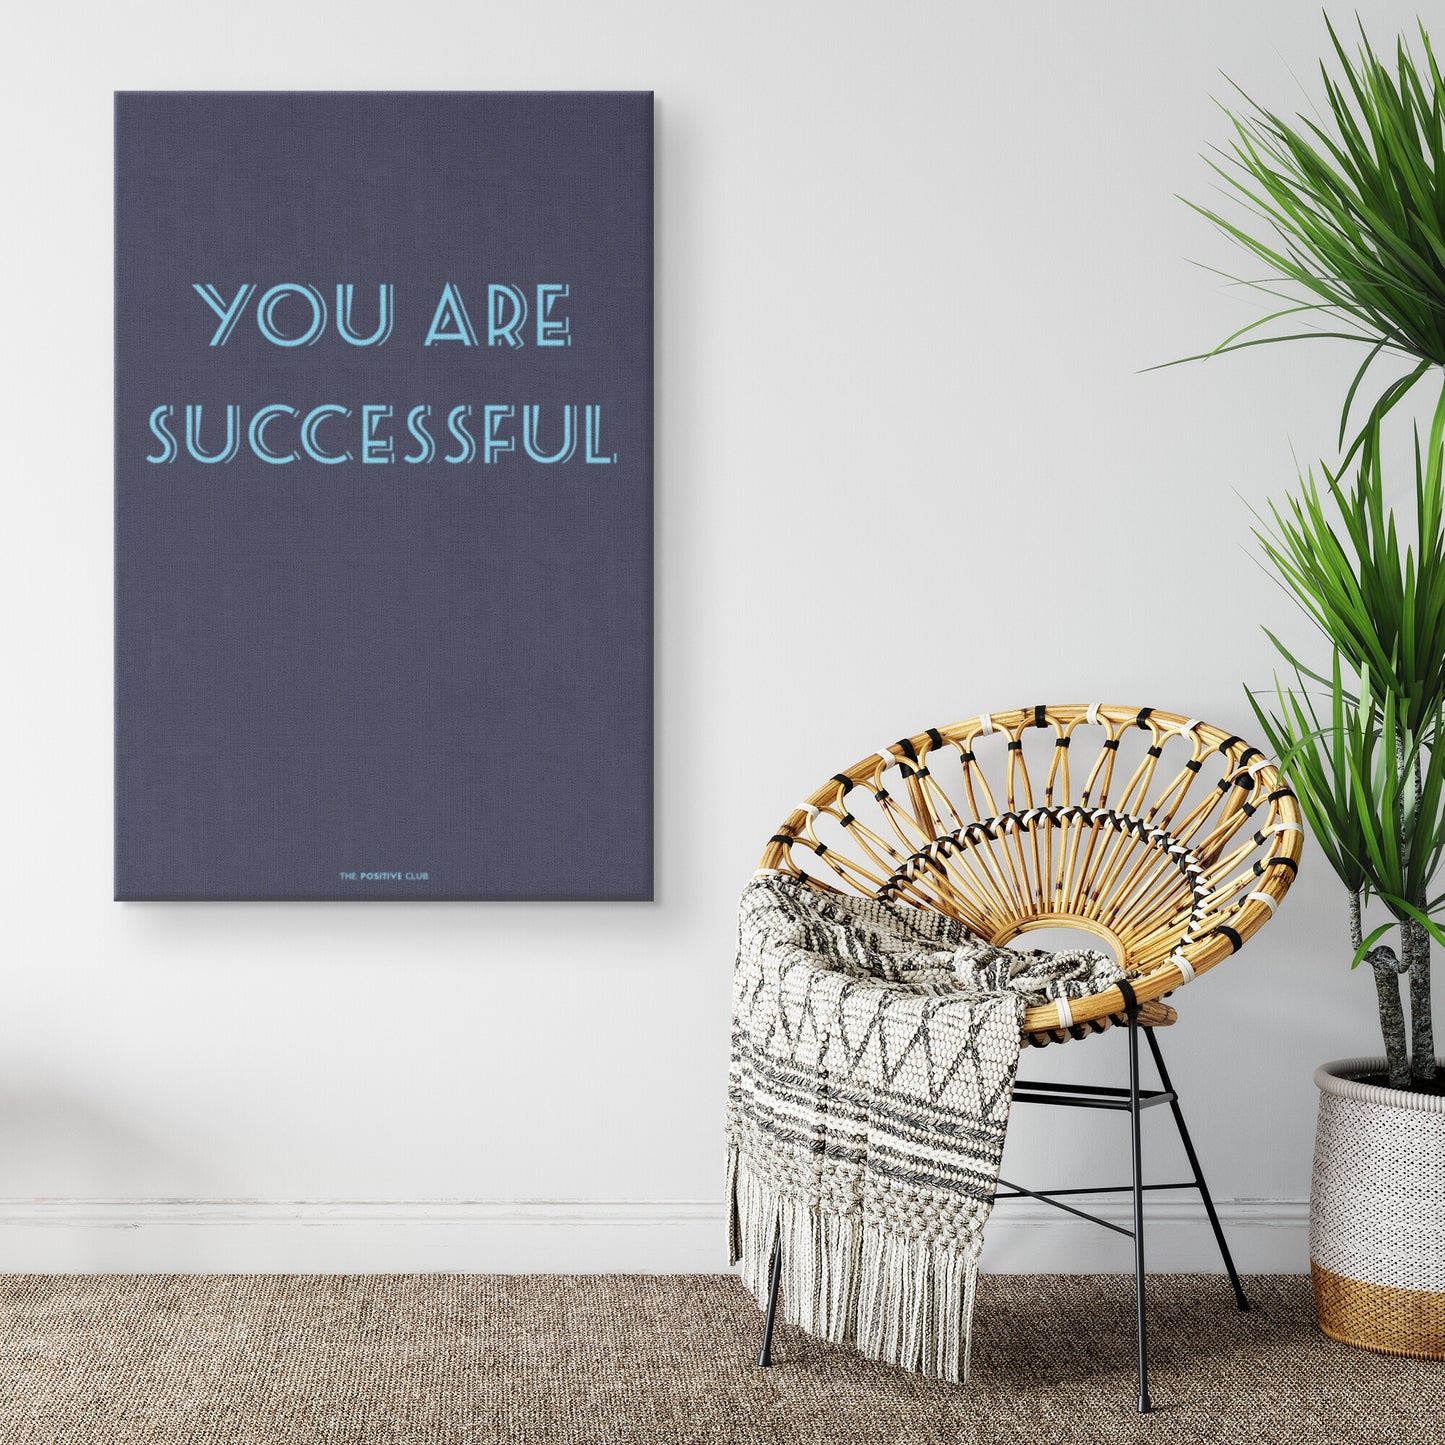 YOU ARE SUCCESSFUL